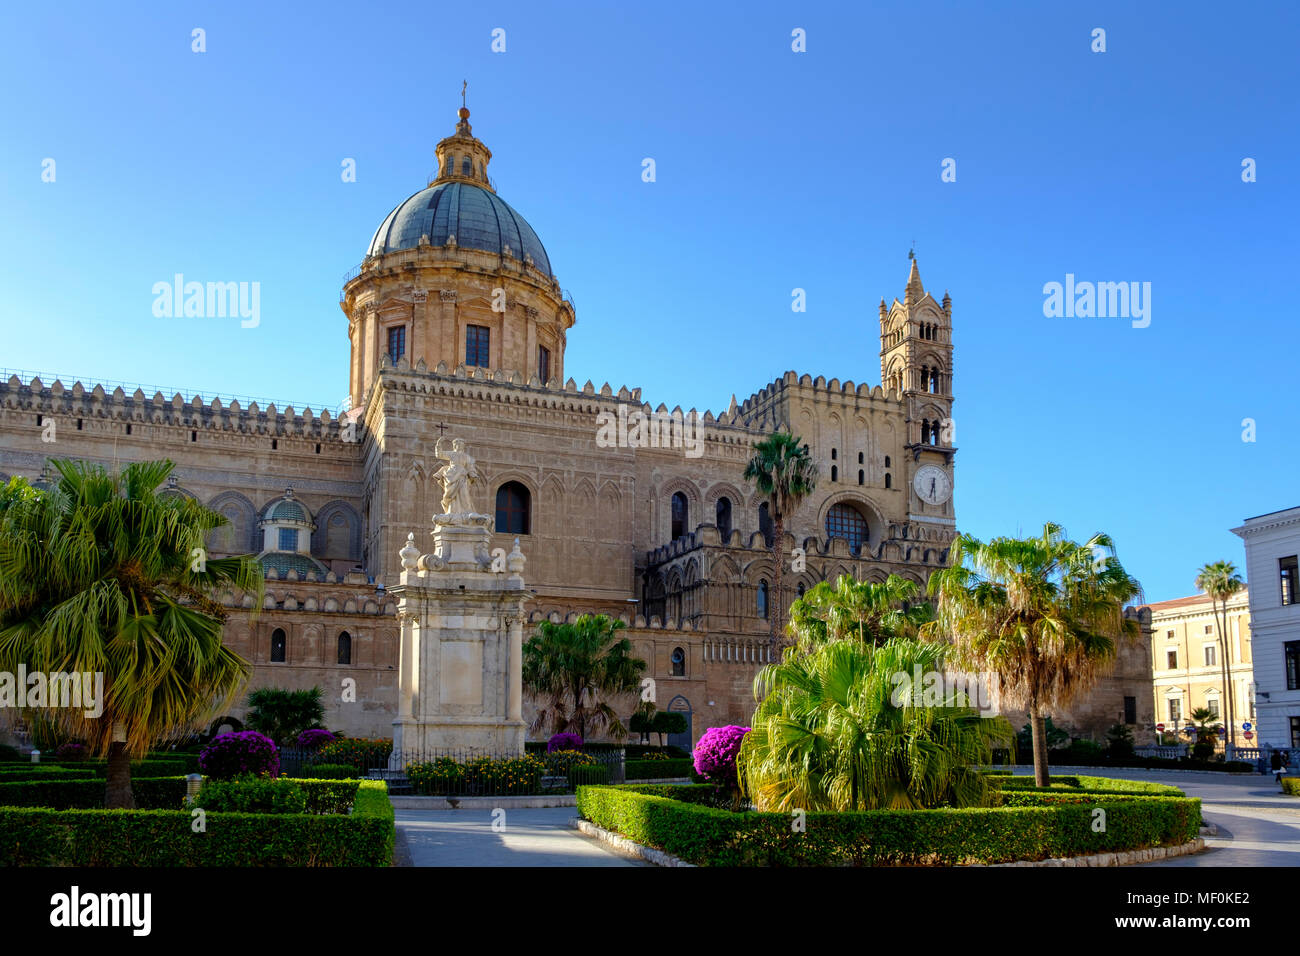 Dom von Palermo, die Kathedrale Maria Santissima Assunta, Palermo, Sizilien, Italien Foto de stock